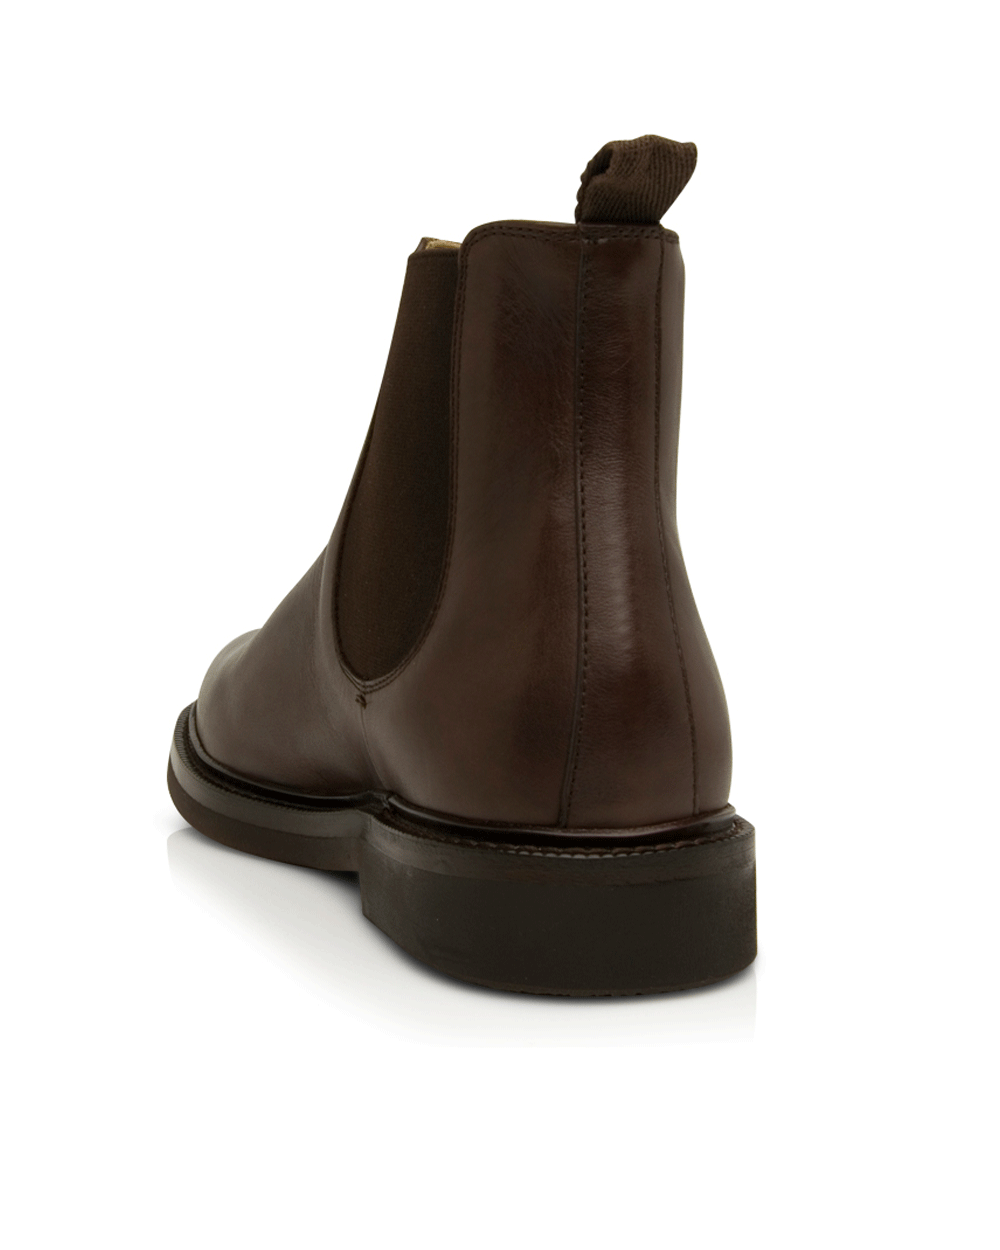 Leather Chelsea Boot in Espresso